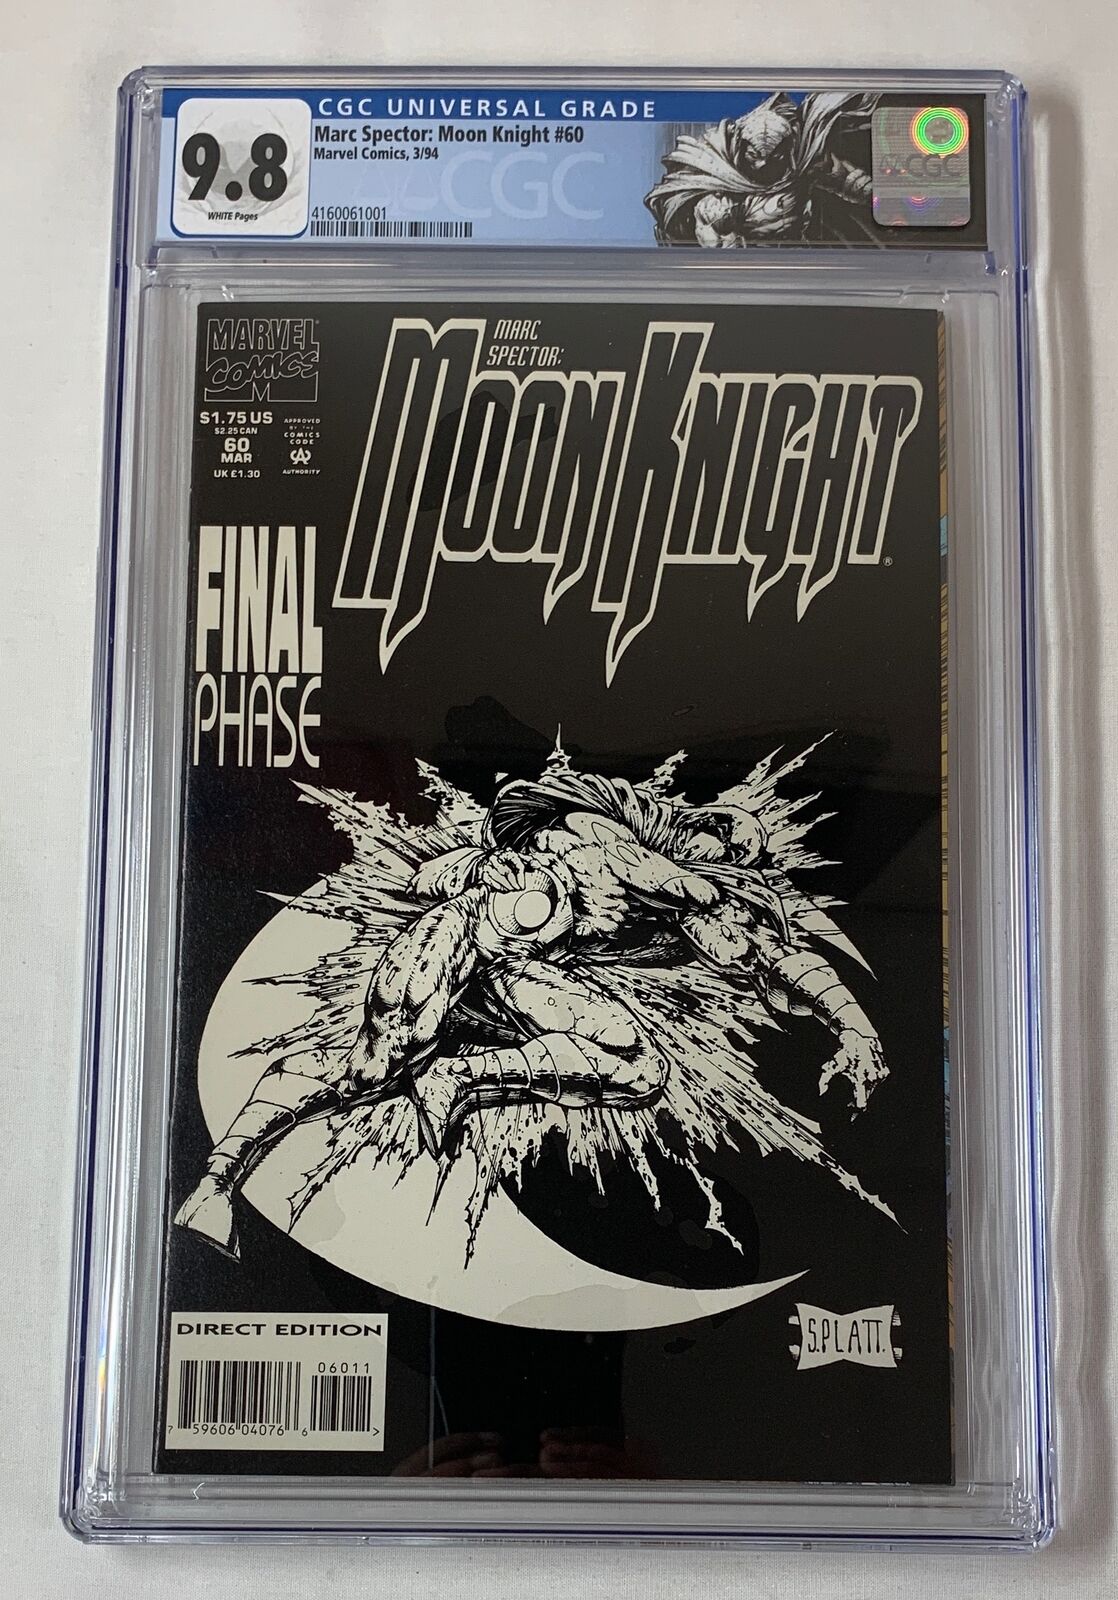 1994 Marvel MARC SPECTOR MOON KNIGHT #60 ~ CGC 9.8 ~ custom label, last issue